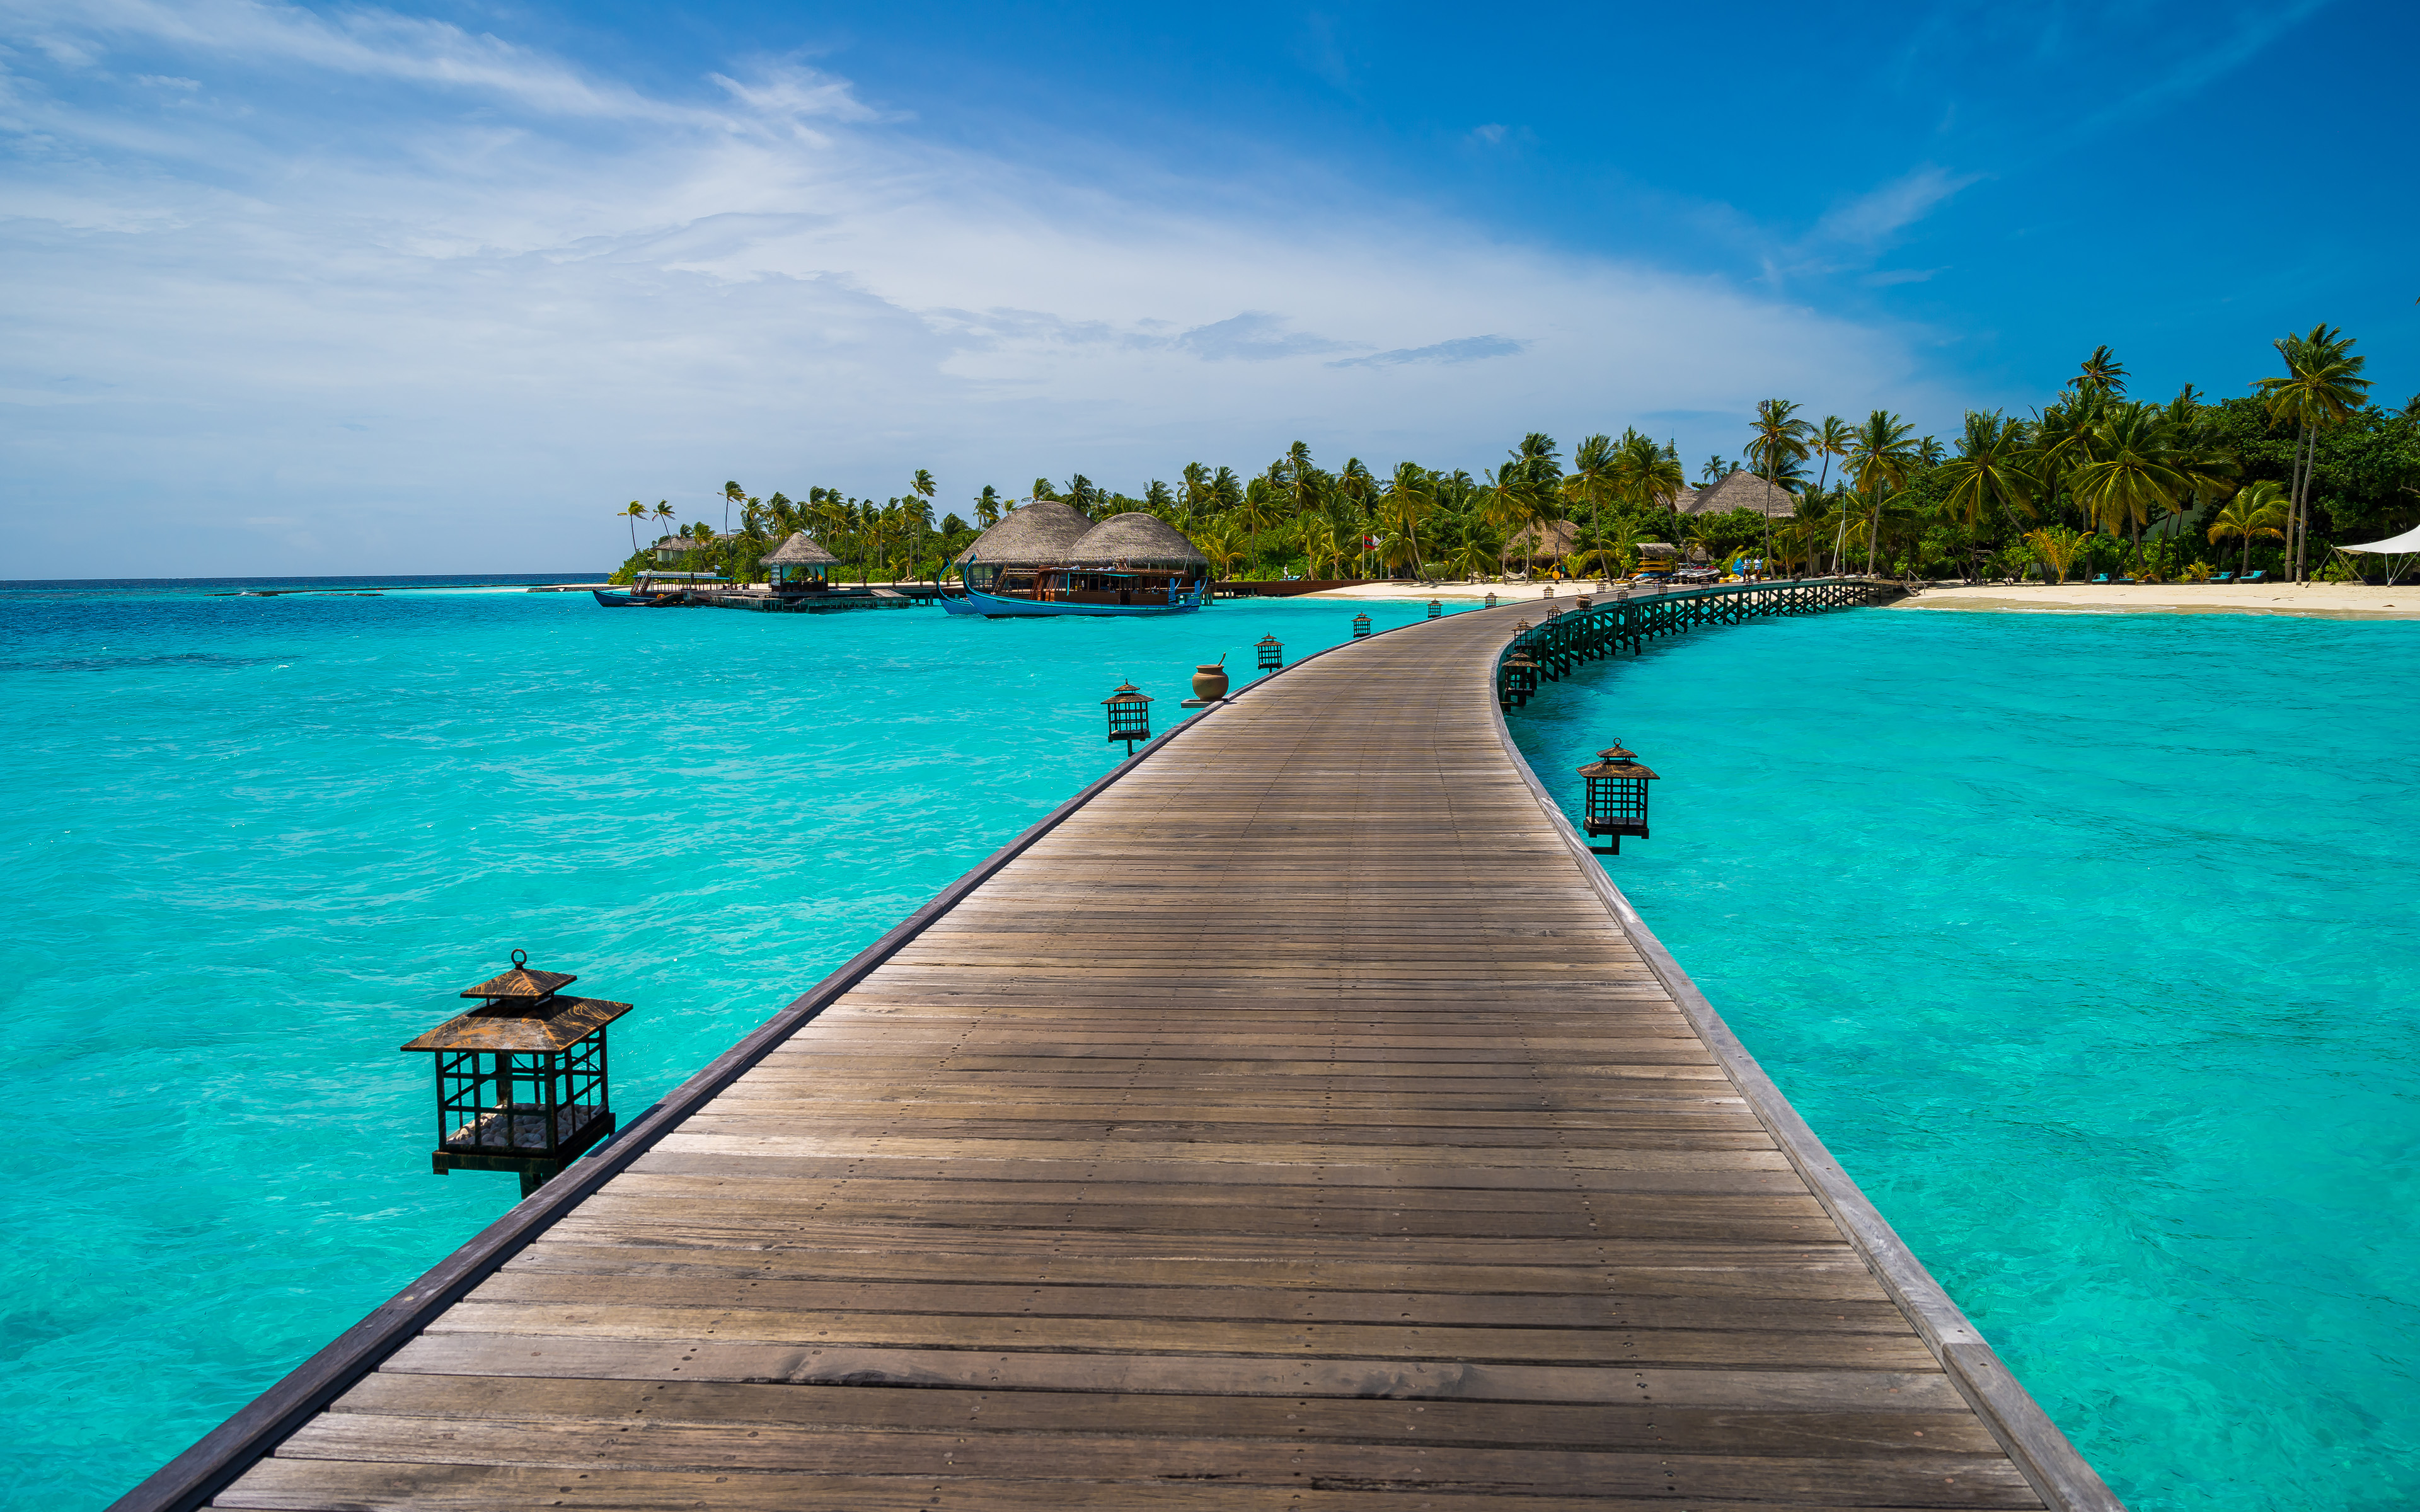 wooden, turquoise, man made, pier, island, maldives, ocean, palm tree, sea, tropical 32K